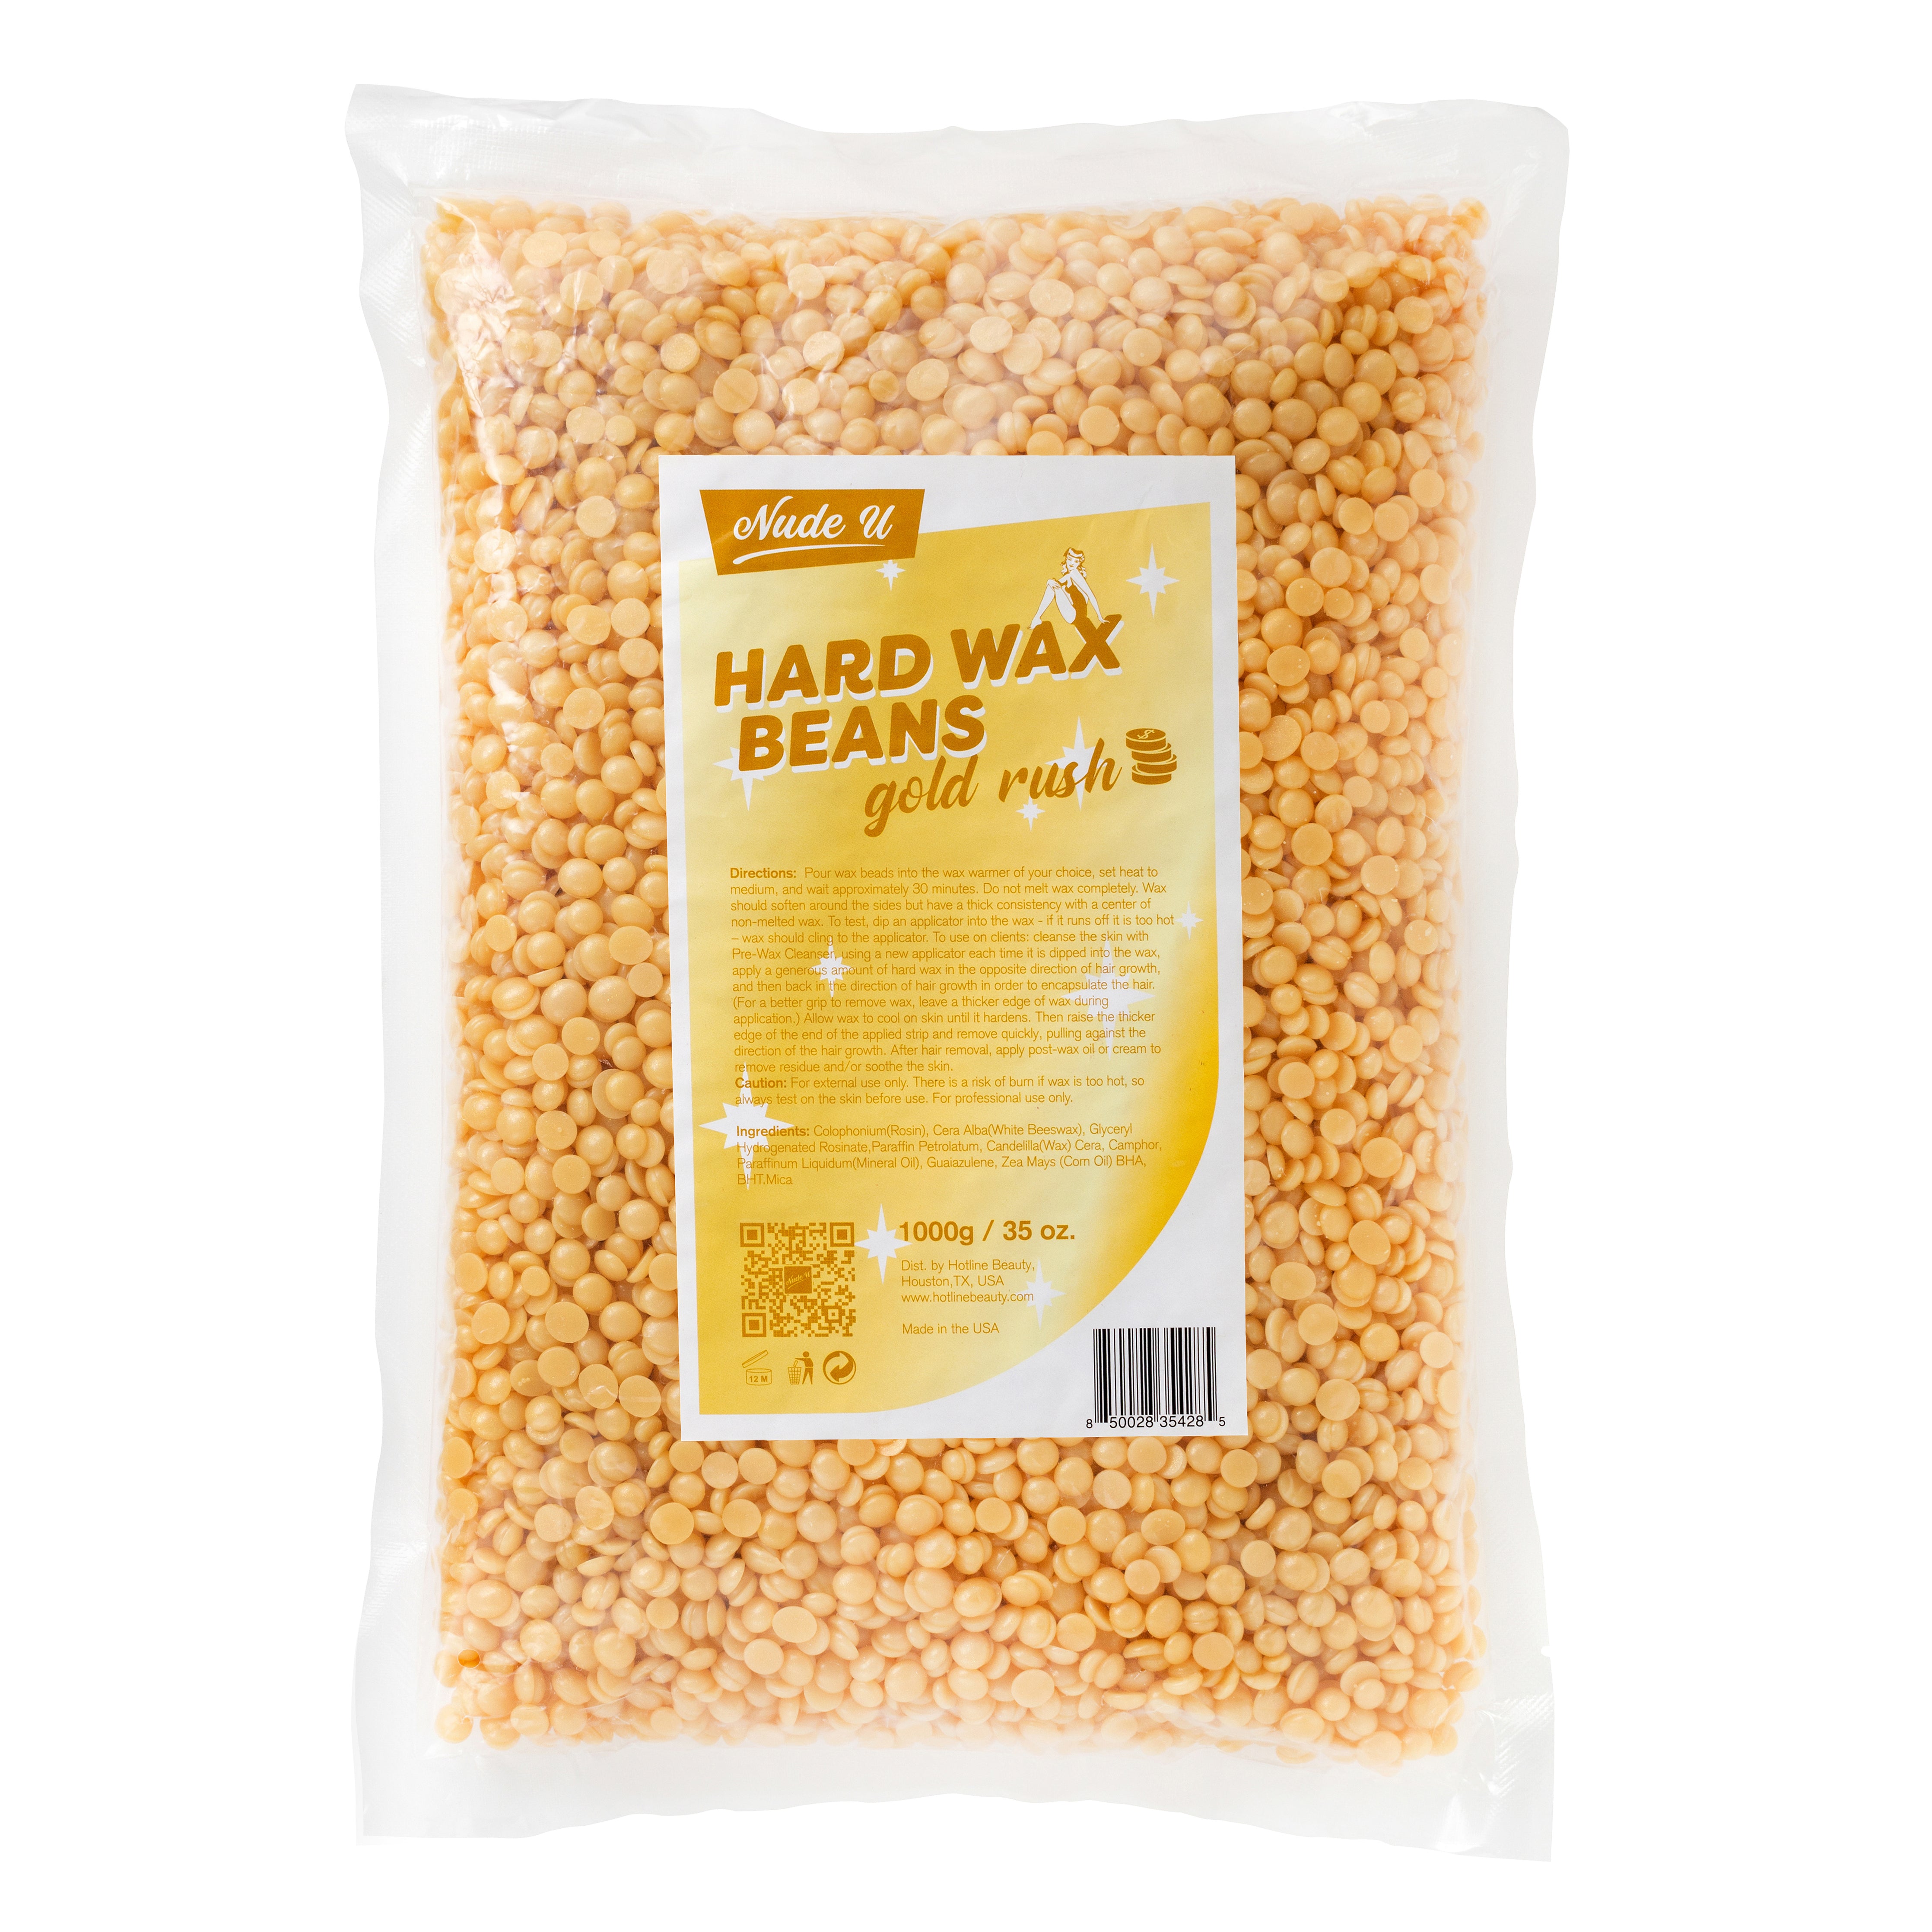 Gold rush hard wax beans